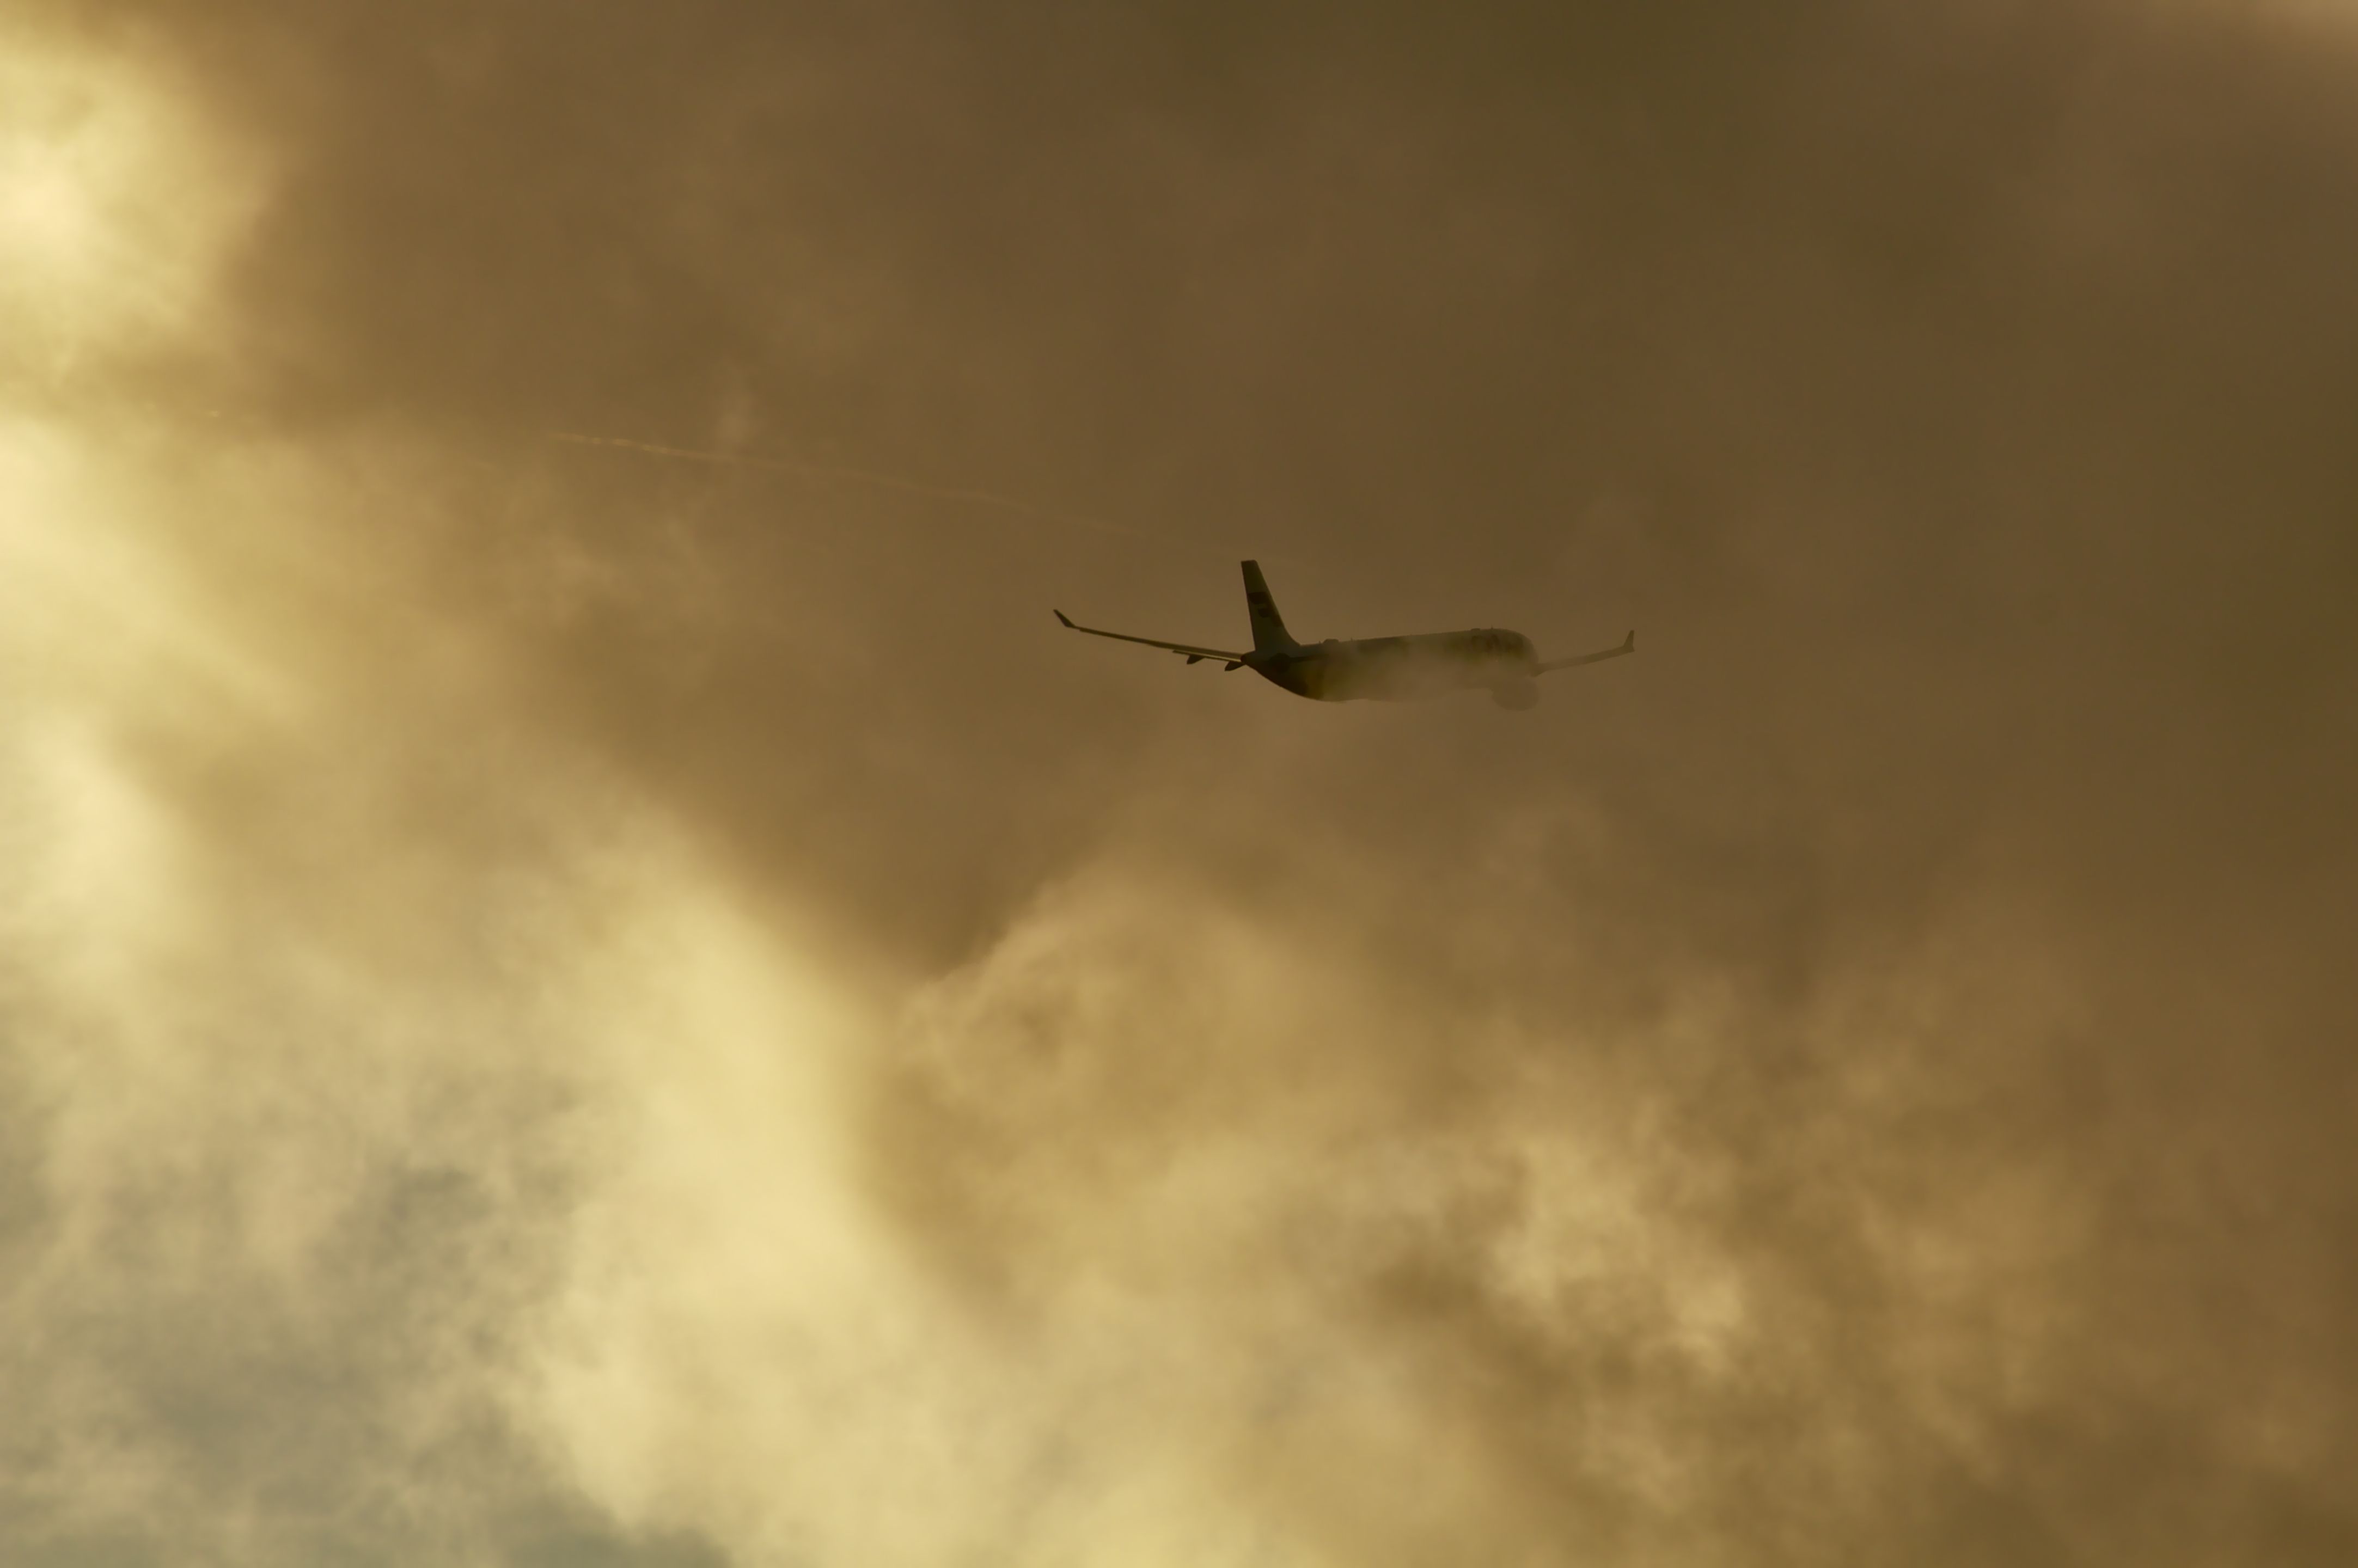 An aircraft climbing into a low cloud layer.